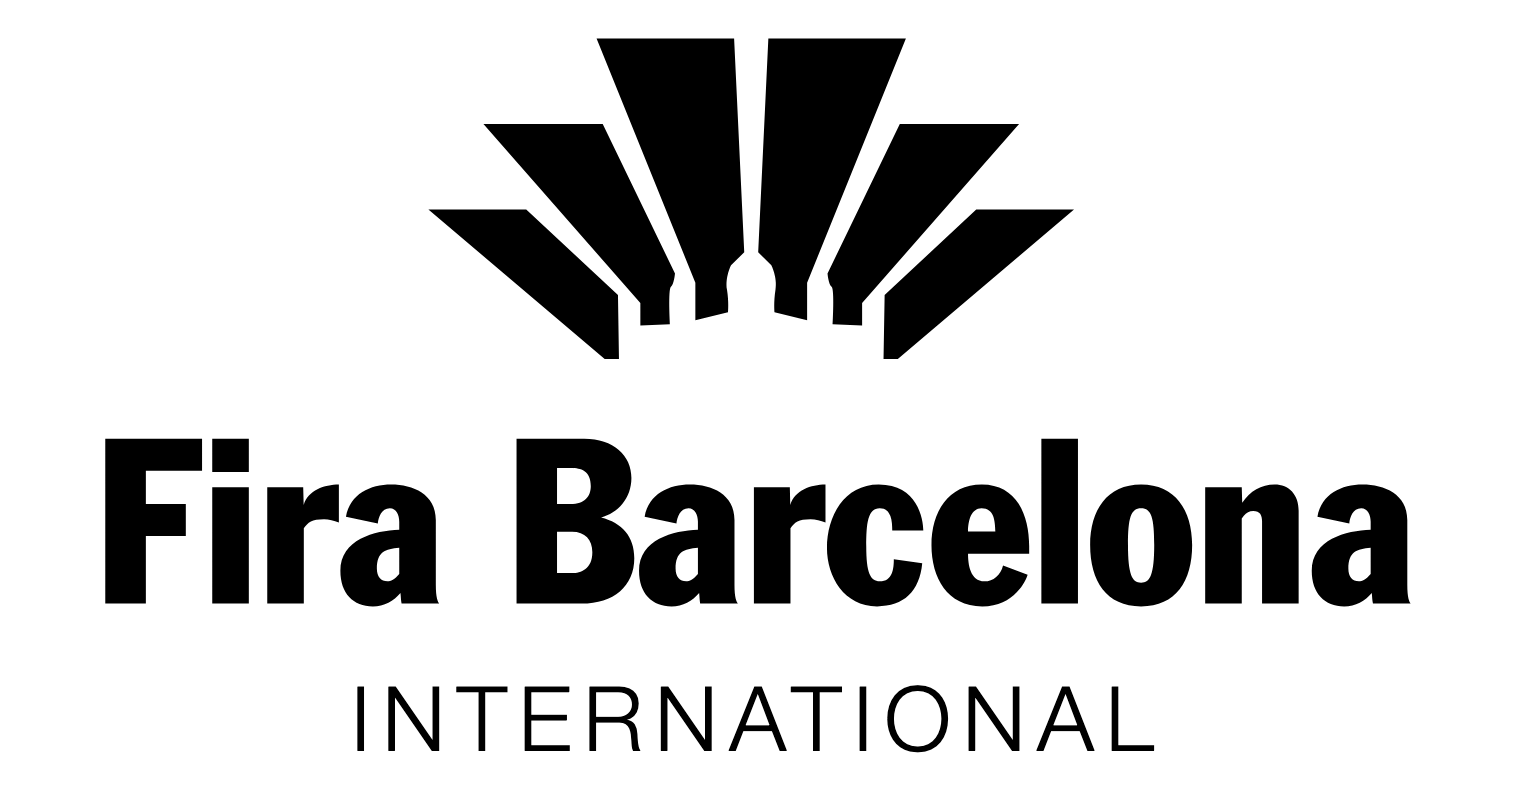 Fira Barcelona International